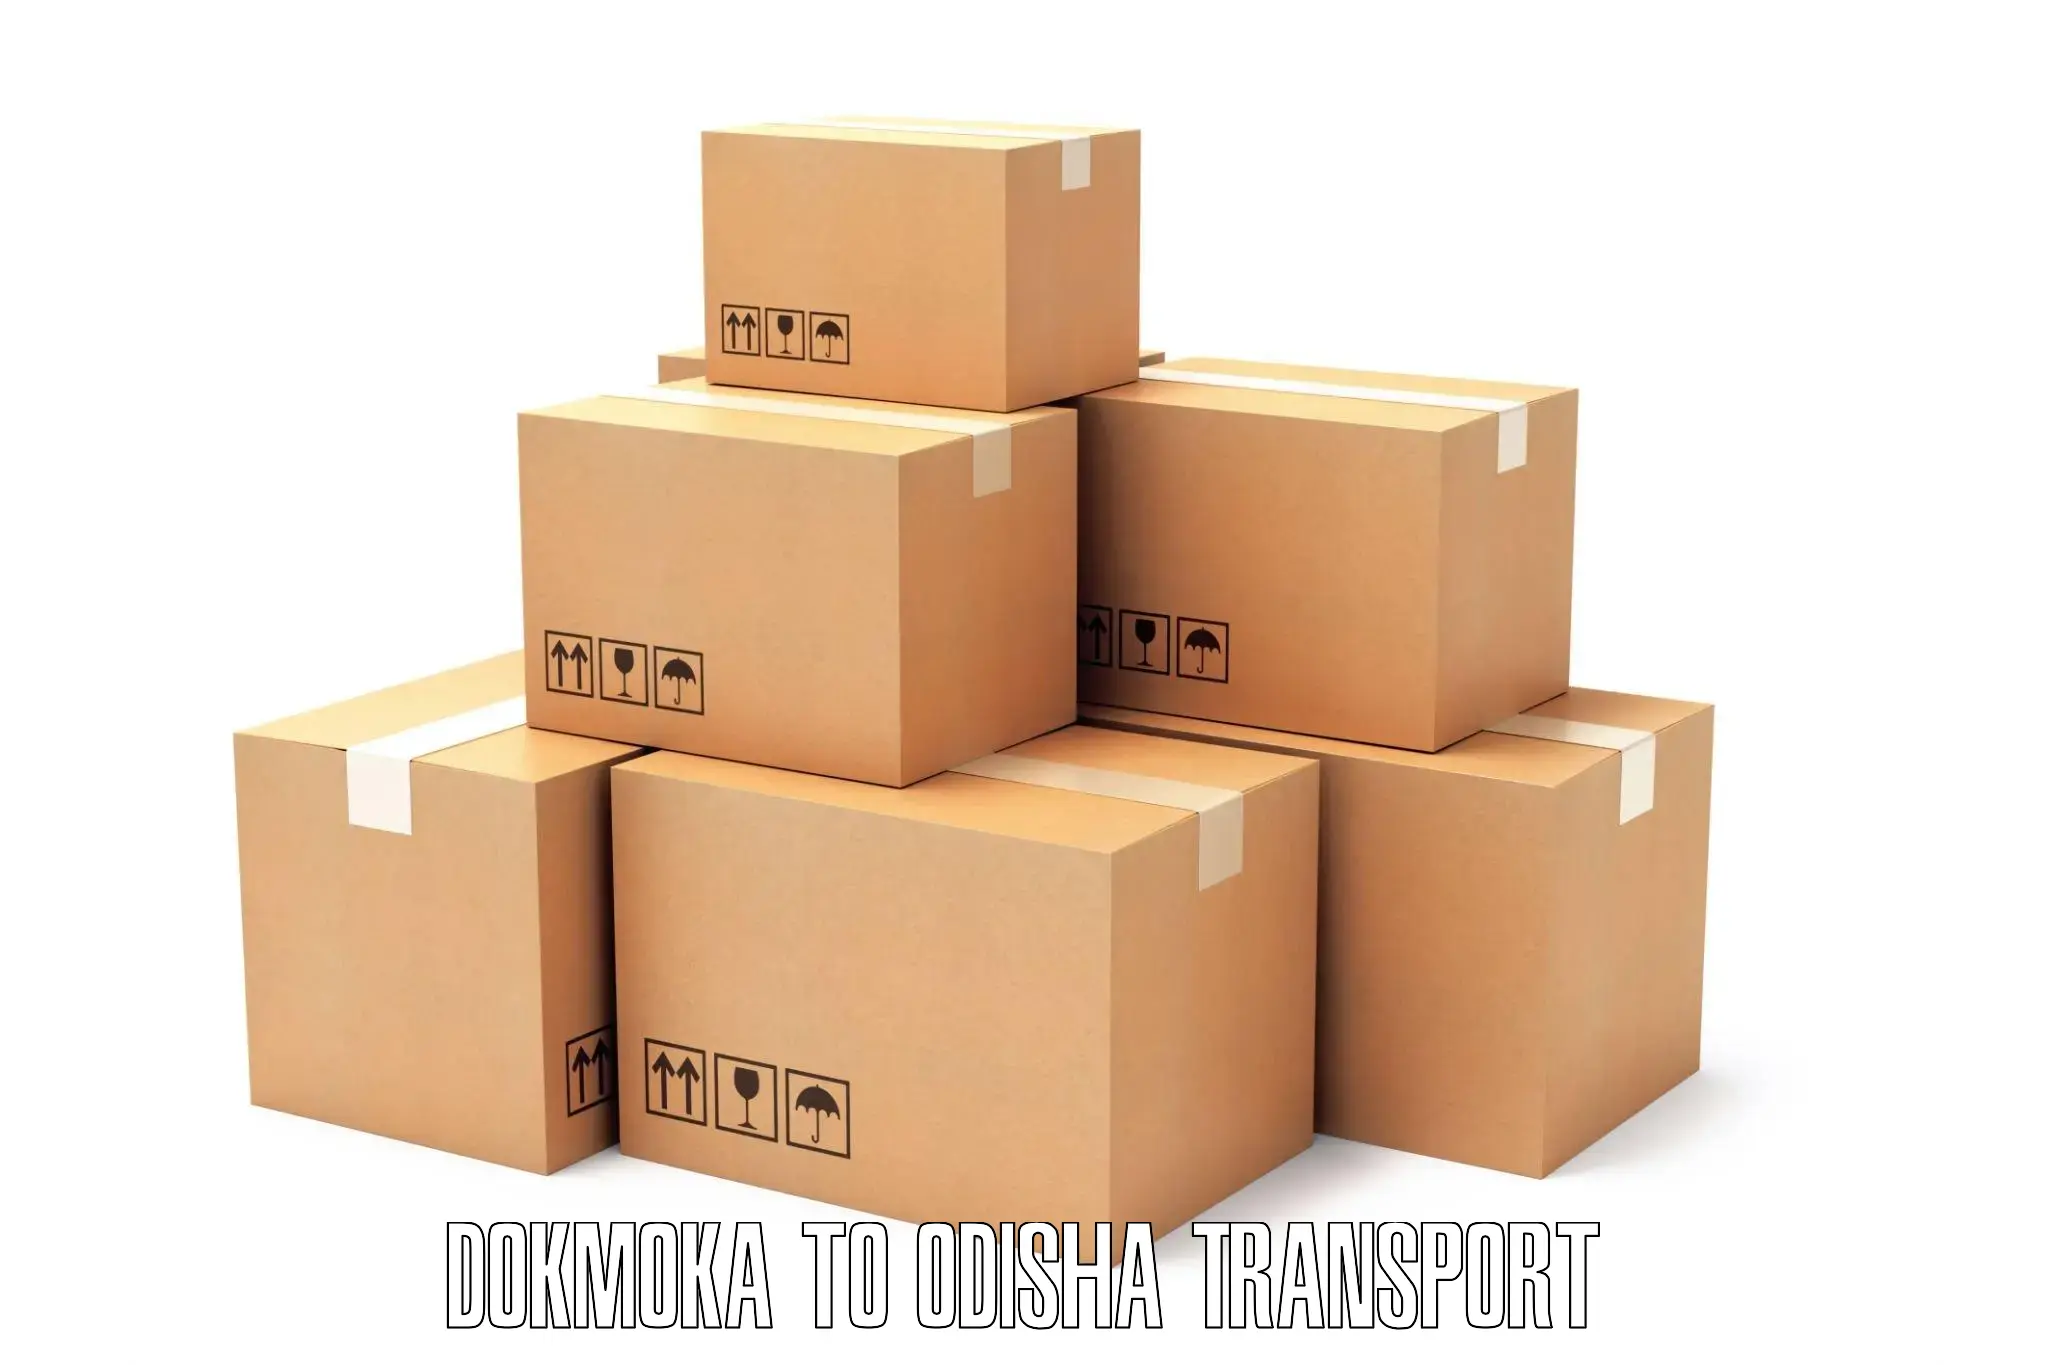 Shipping partner Dokmoka to Muribahal